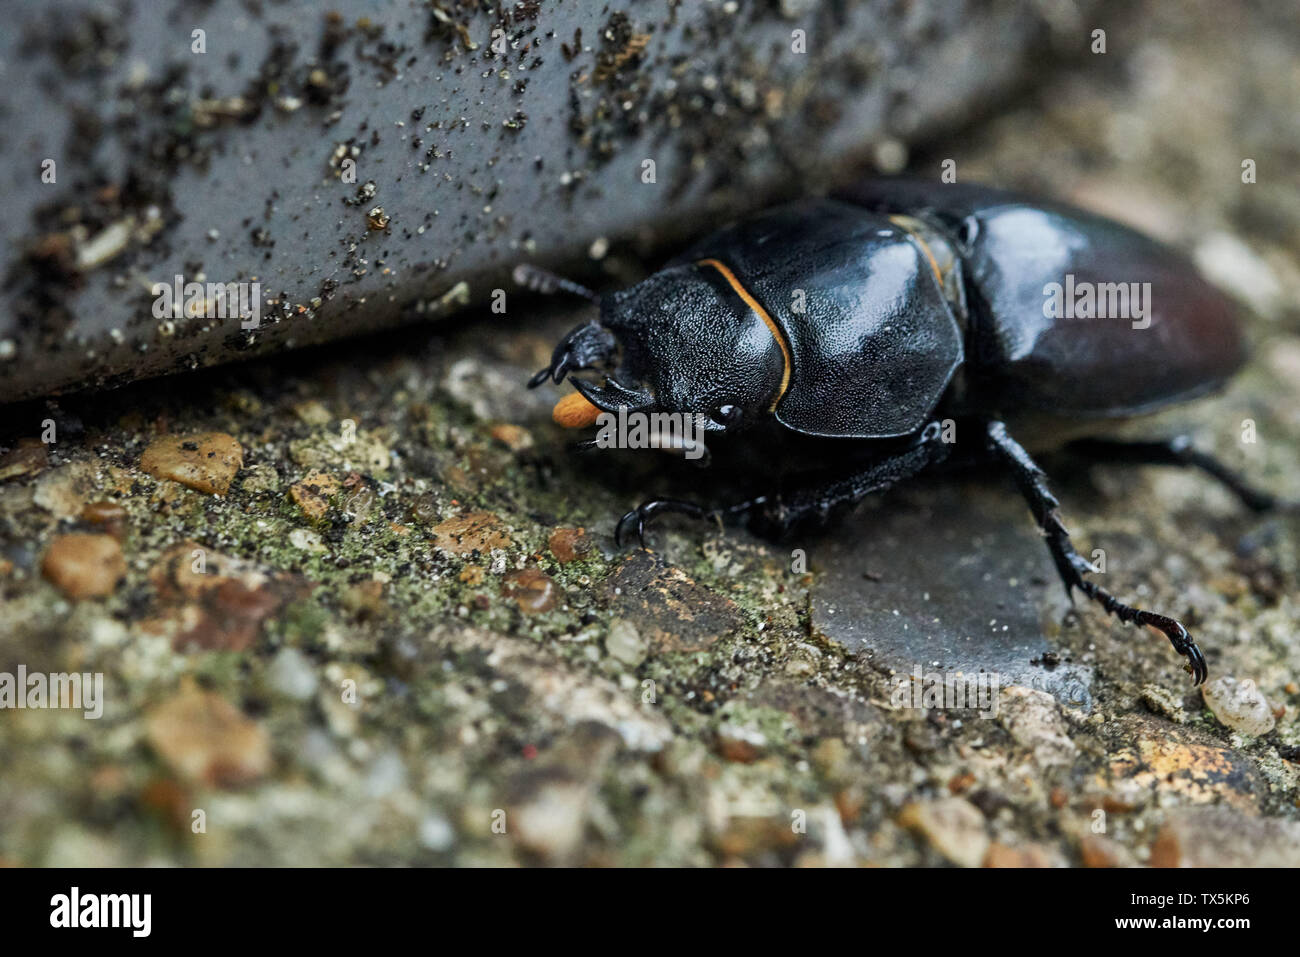 A large, black Lesser Stag Beetle (Dorcus parallelipipedus) ambling along a concrete patio. Stock Photo